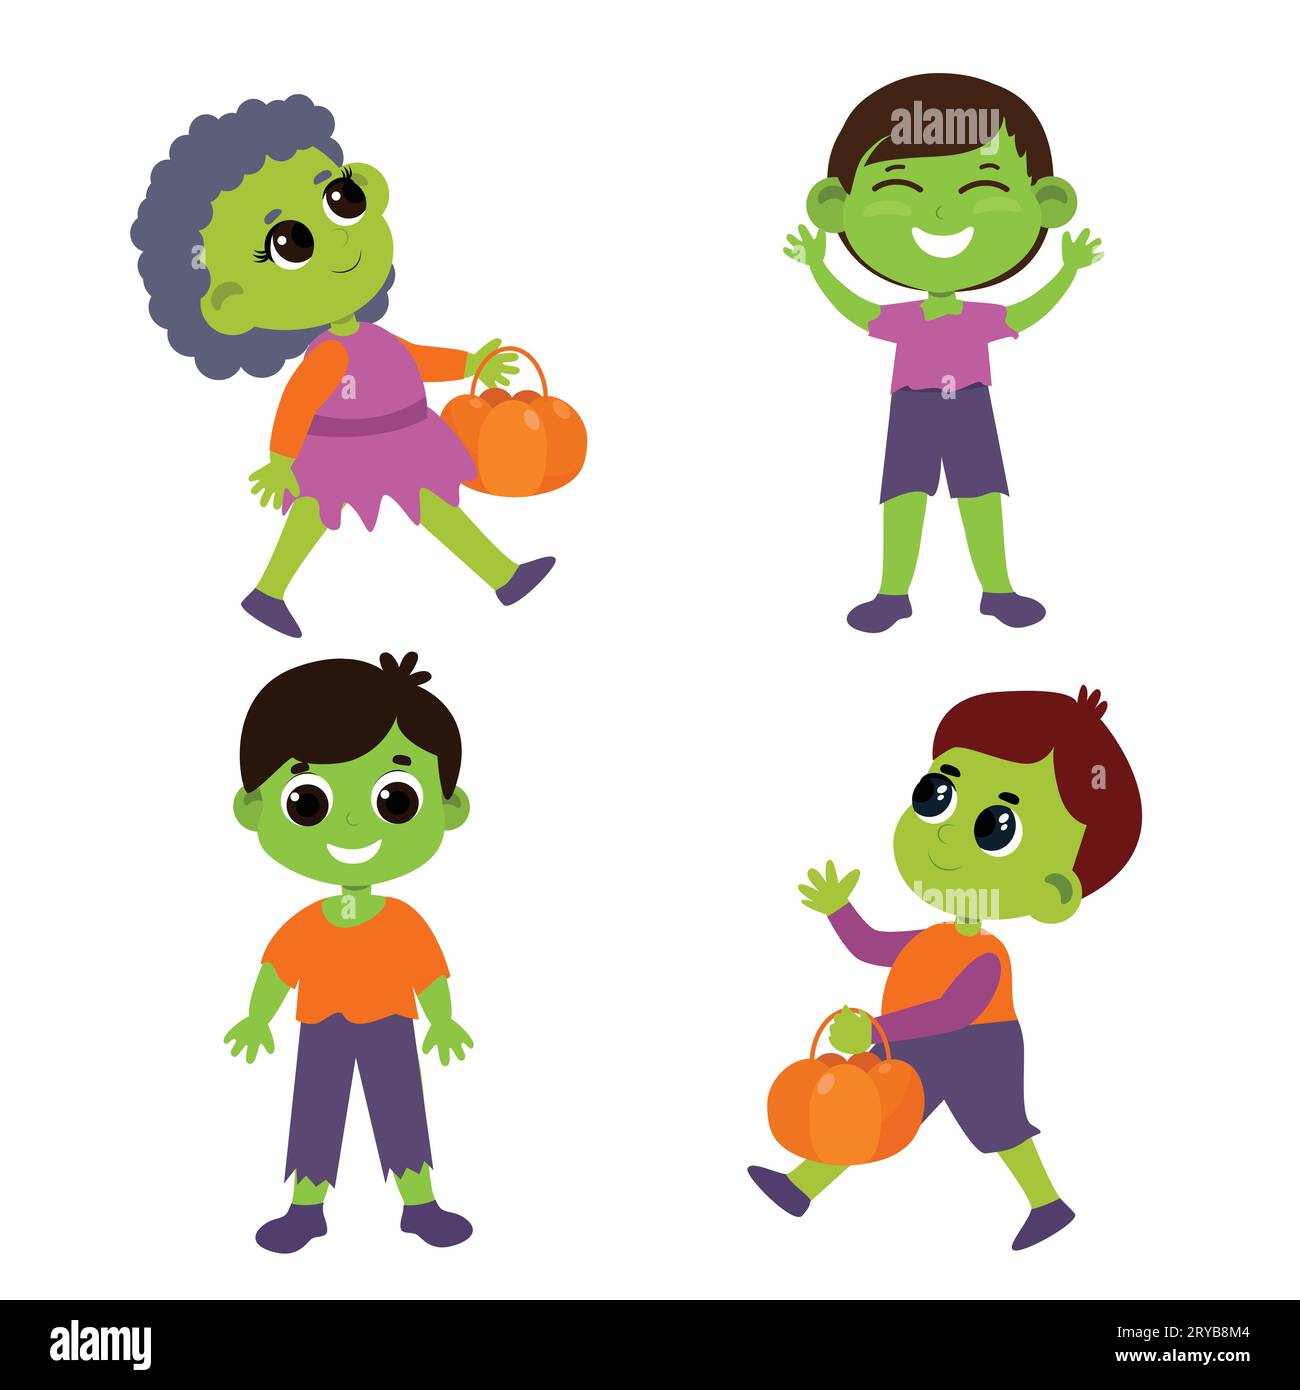 Costume da scolaretta zombie bambina Halloween